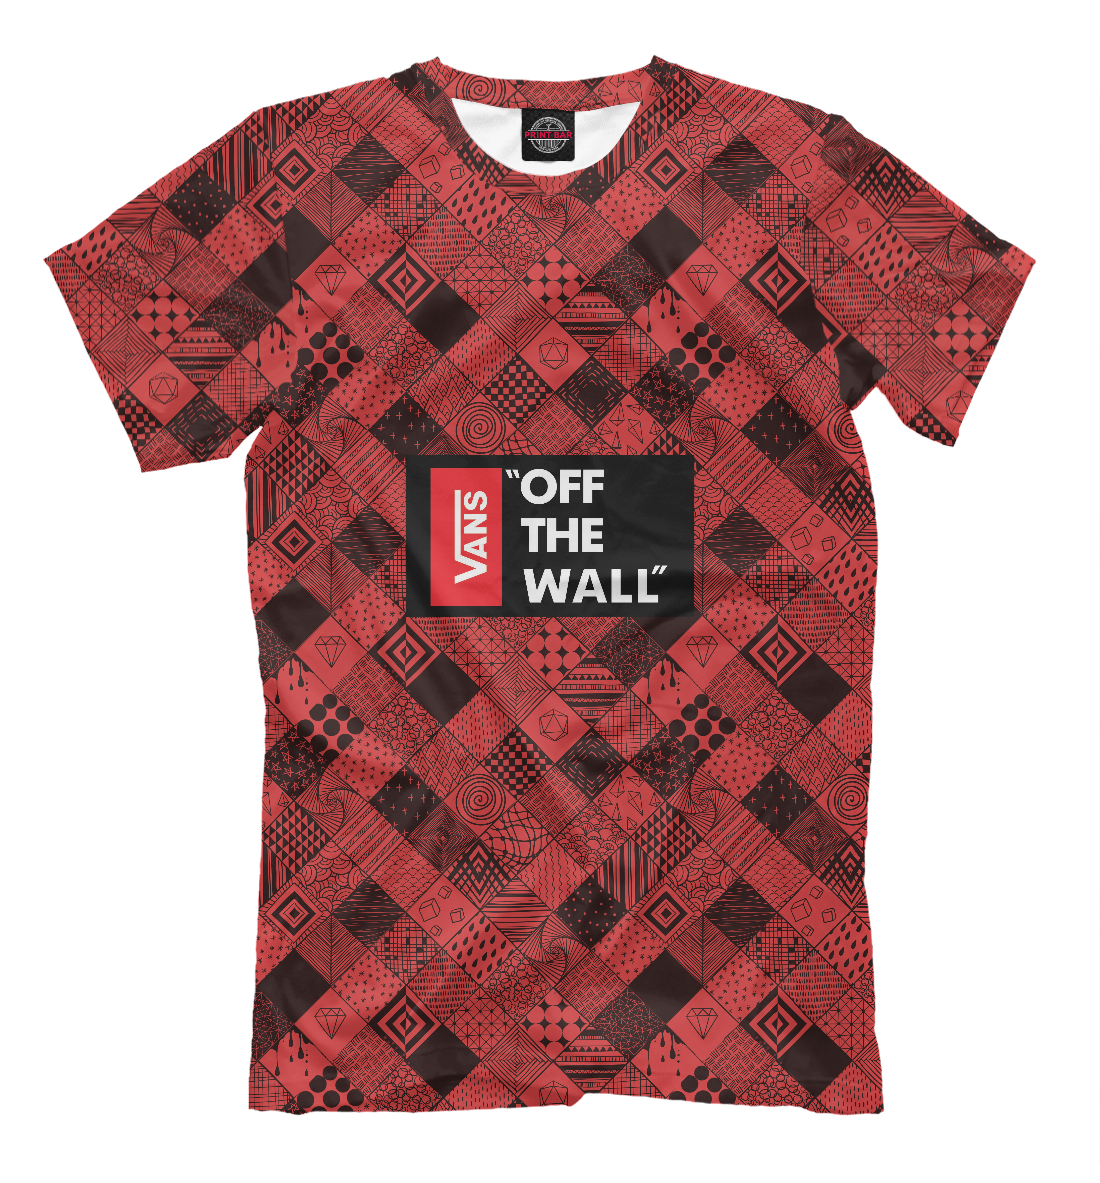 Футболка Vans of the wall (Red and Black) для мужчин, артикул: VAN-495790-fut-2mp